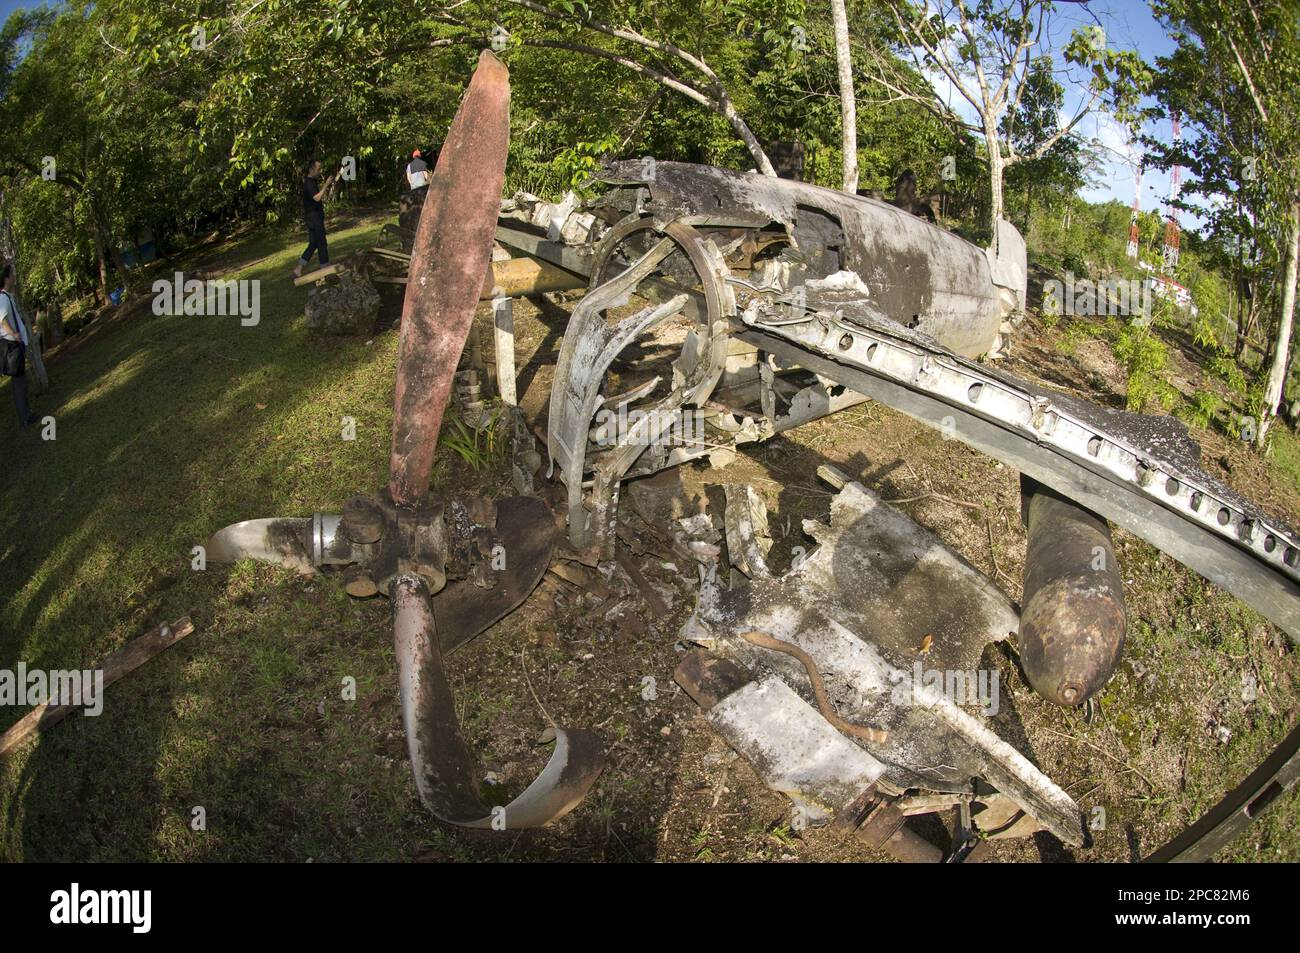 Propeller and bomb on the wing of a wrecked World War II aircraft, Gua Binsari, Biak, West Papua (Irian Jaya), Indonesia Stock Photo